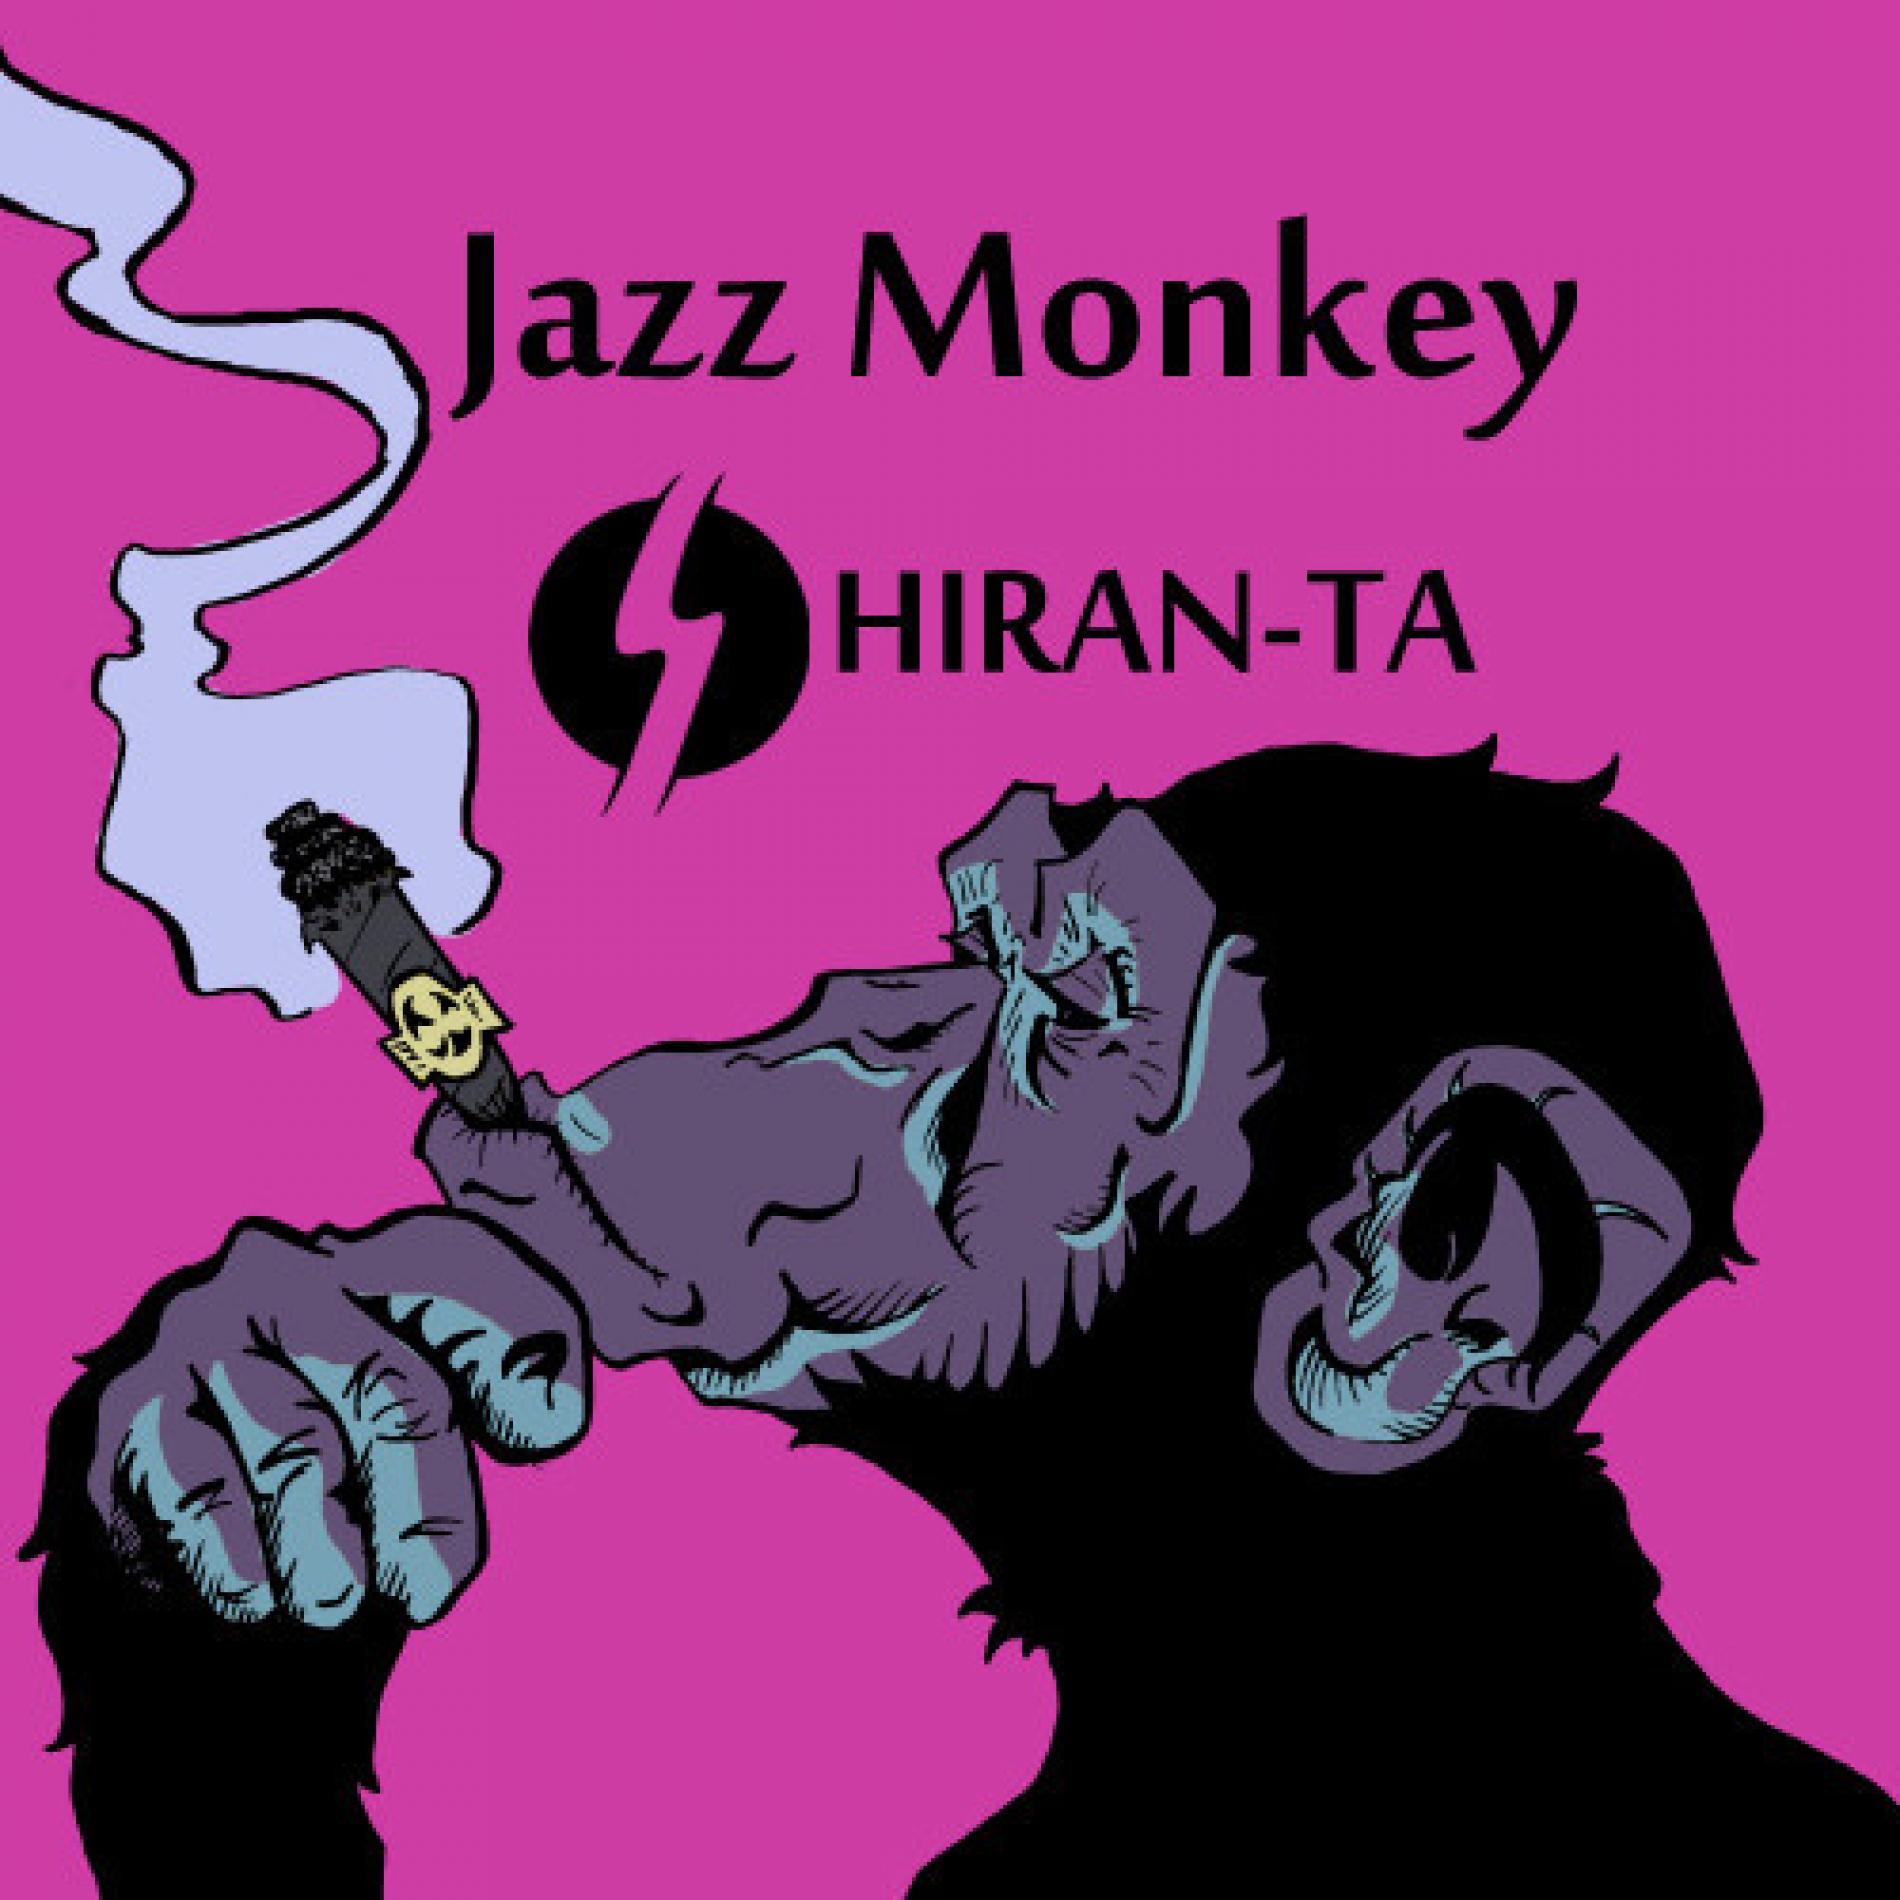 Shiran-Ta: Jazz Monkey